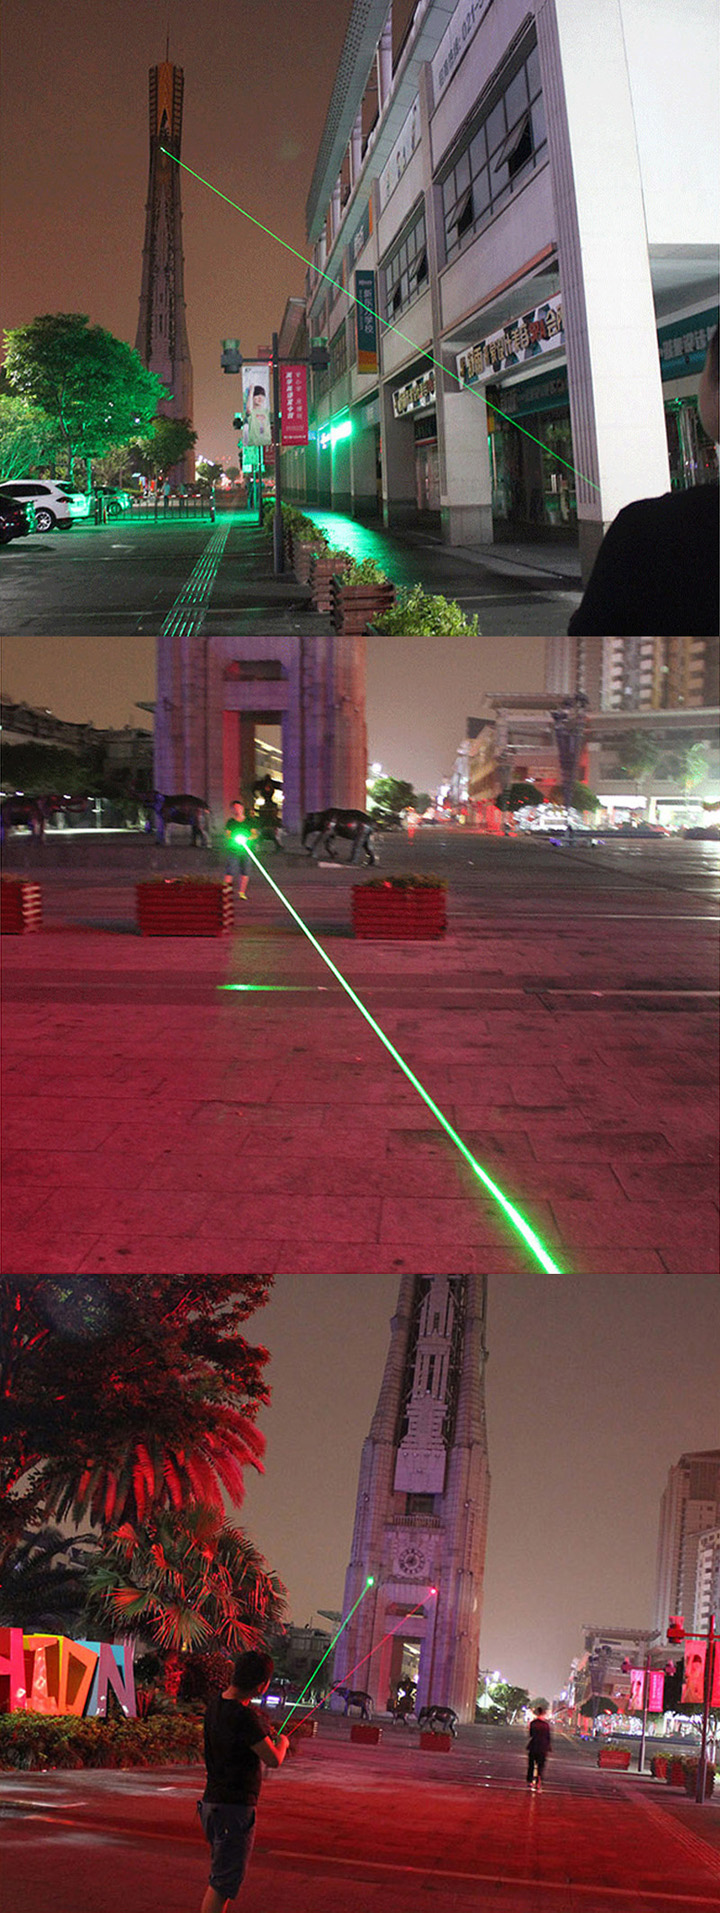 puntatore laser verde USB